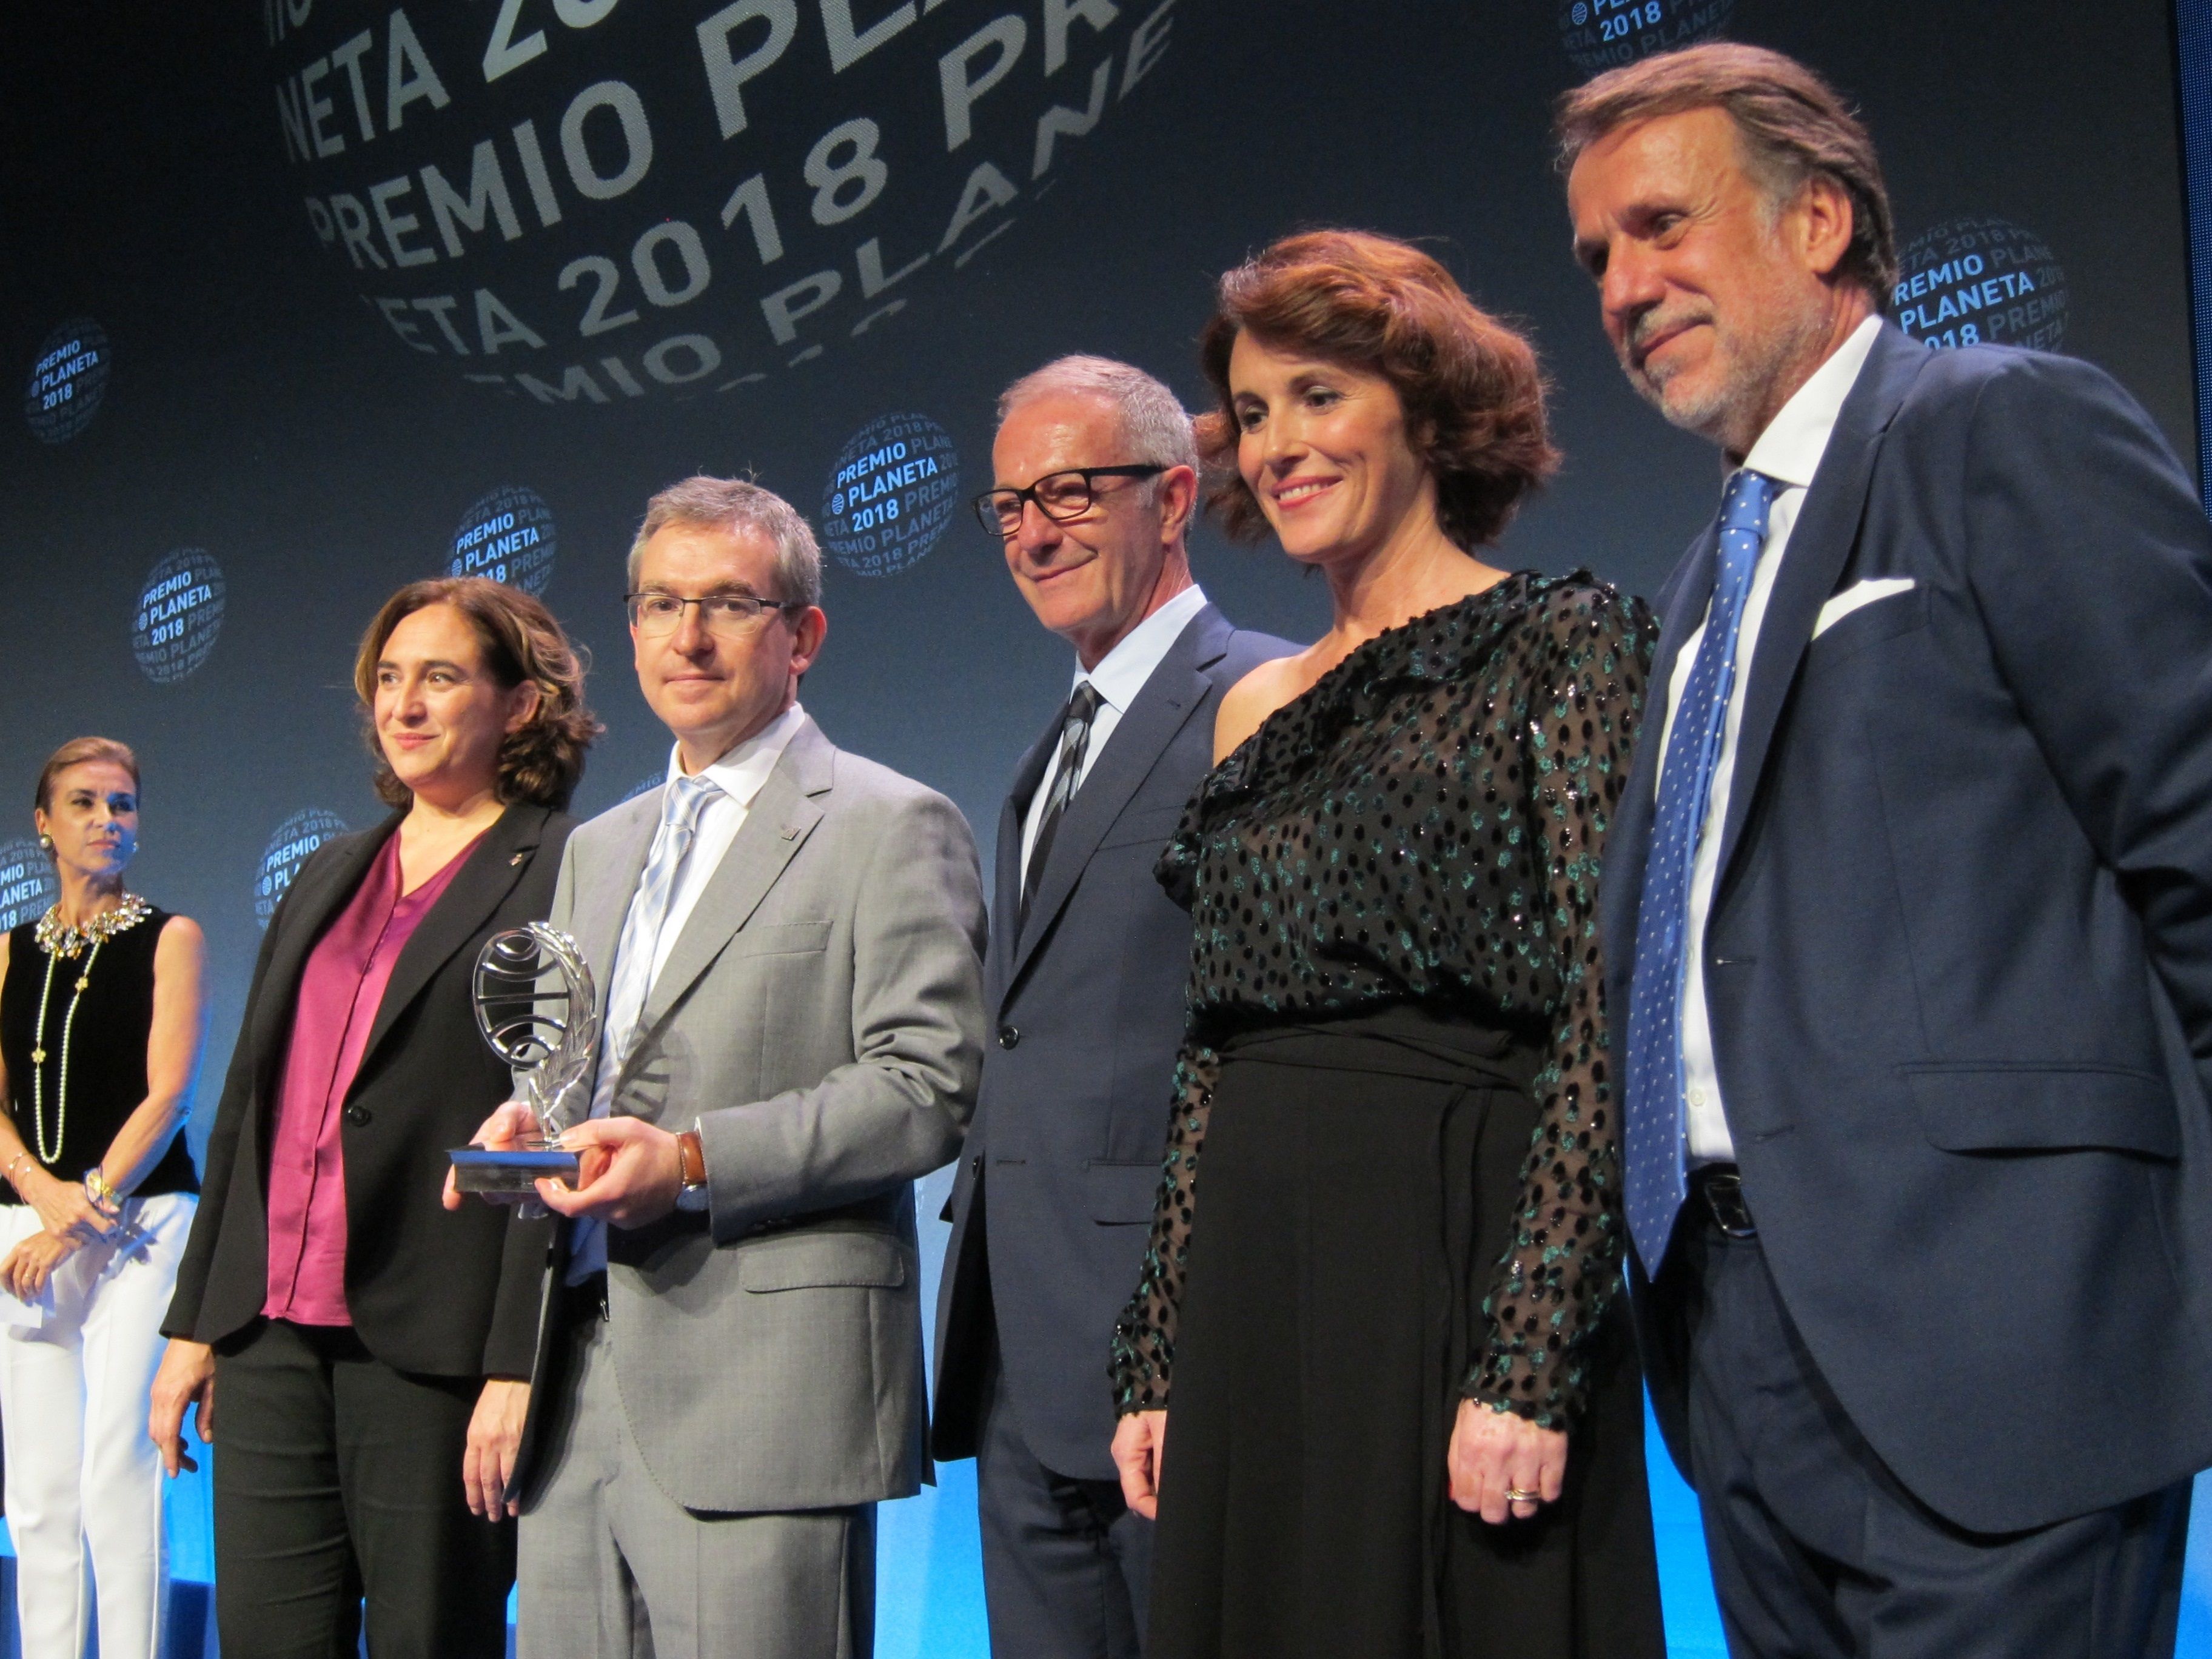 Ada Colau, junto a Santiago Posteguillo, ganador del Premio Planeta 2018. Europa Press